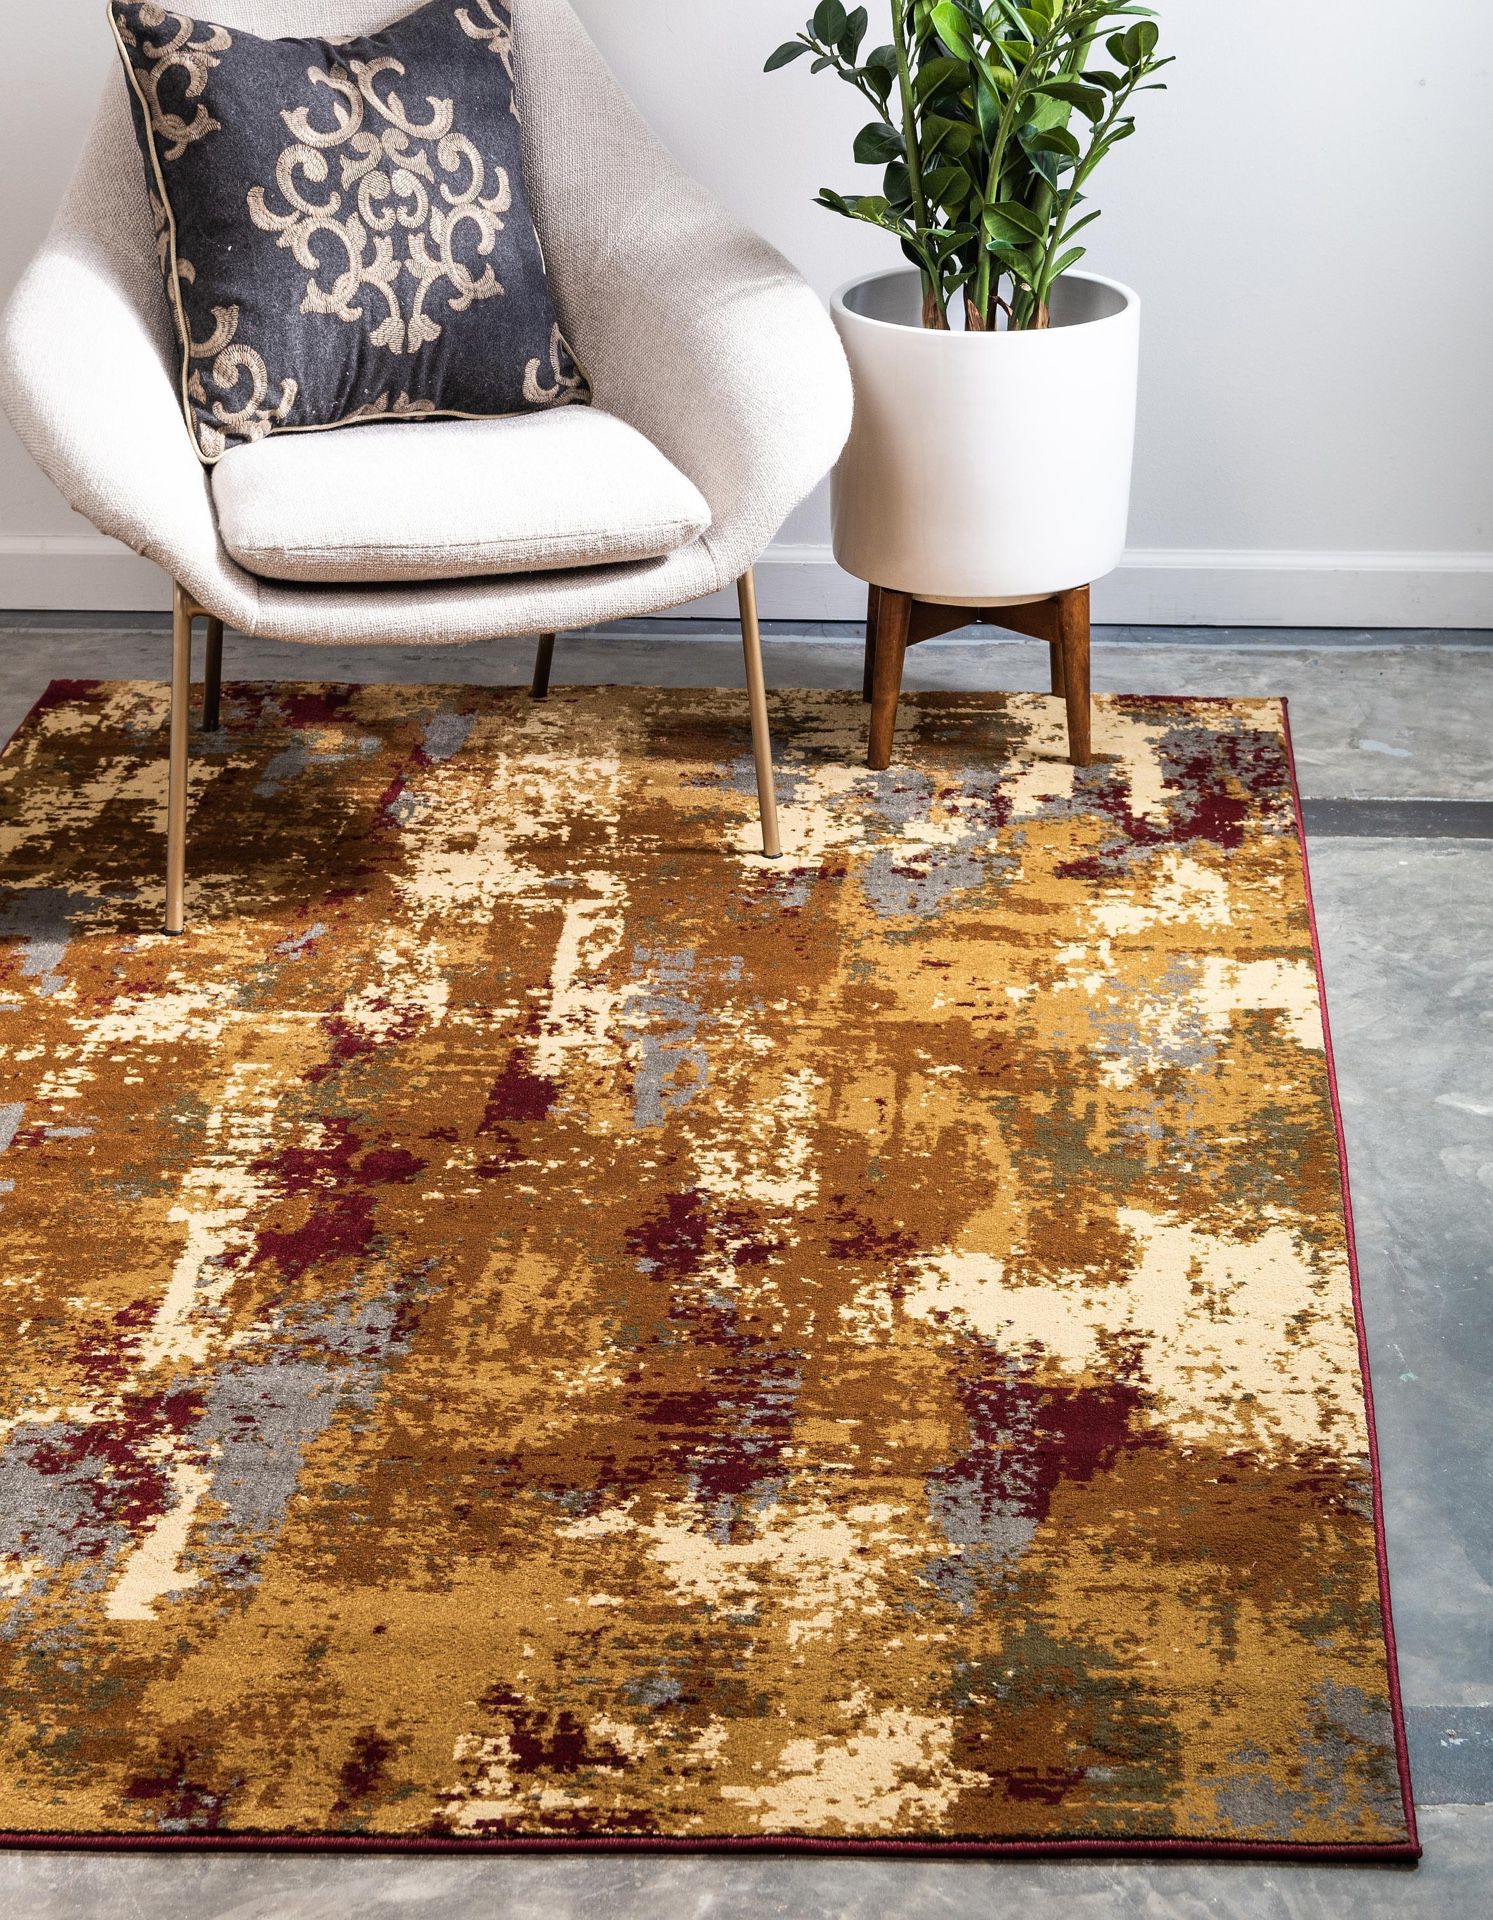 New modern rug size 5x8 nice beige tan carpet